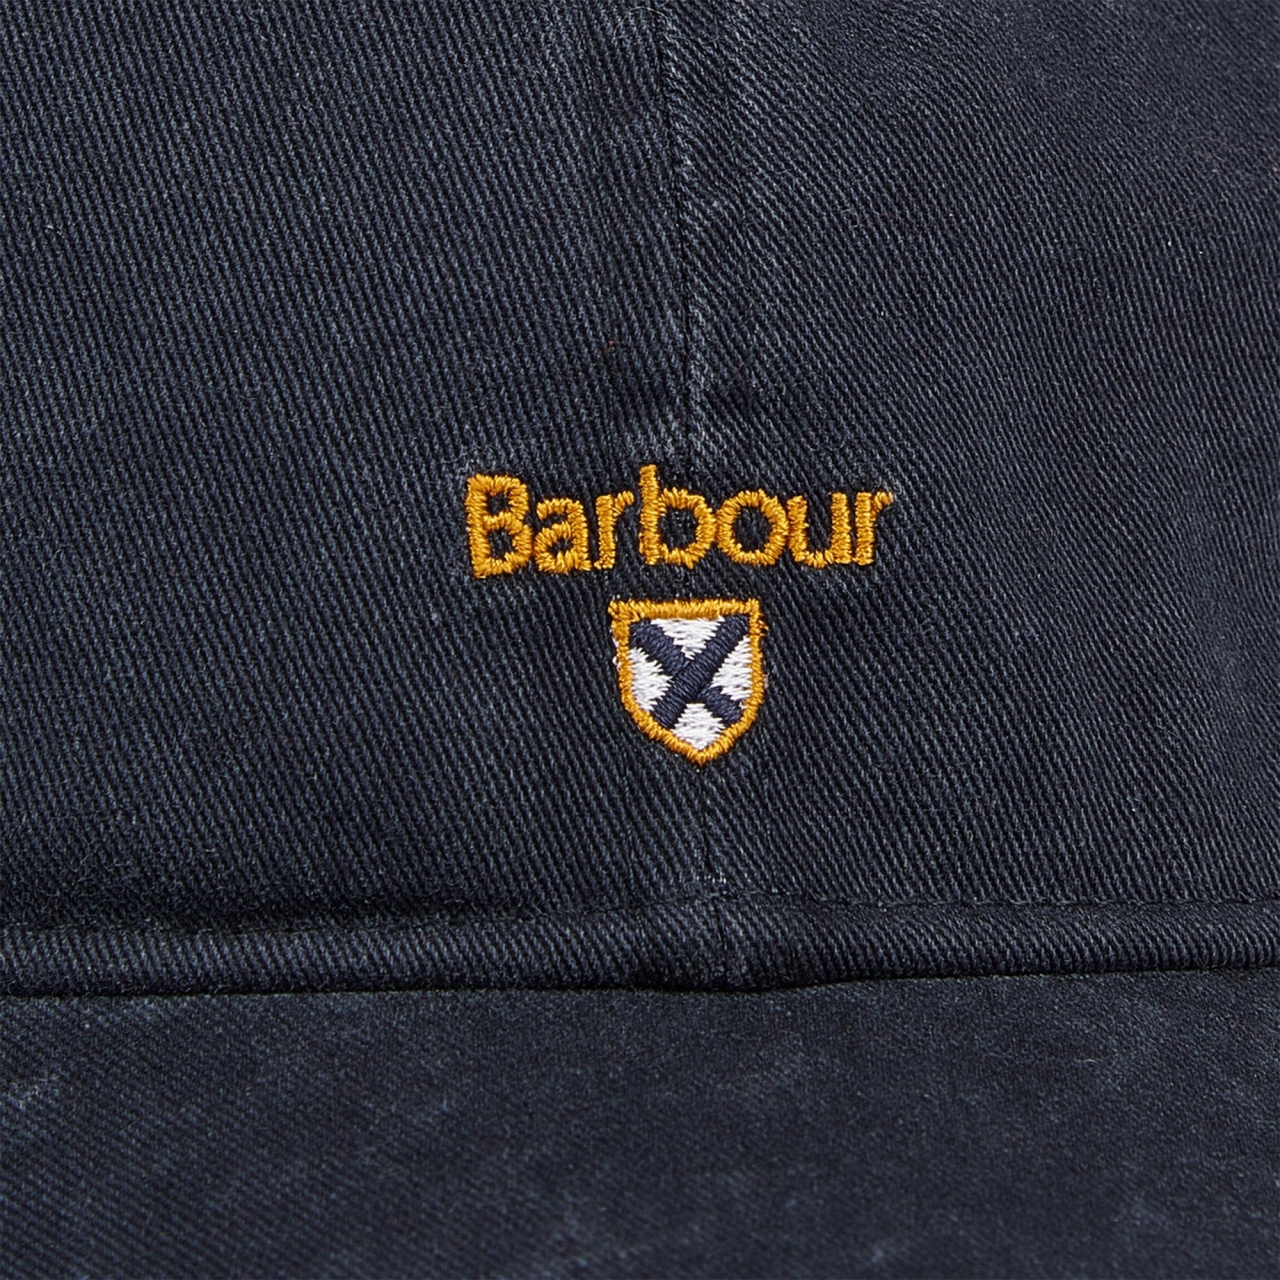 Barbour Tartan Crest Sports Cap - navy